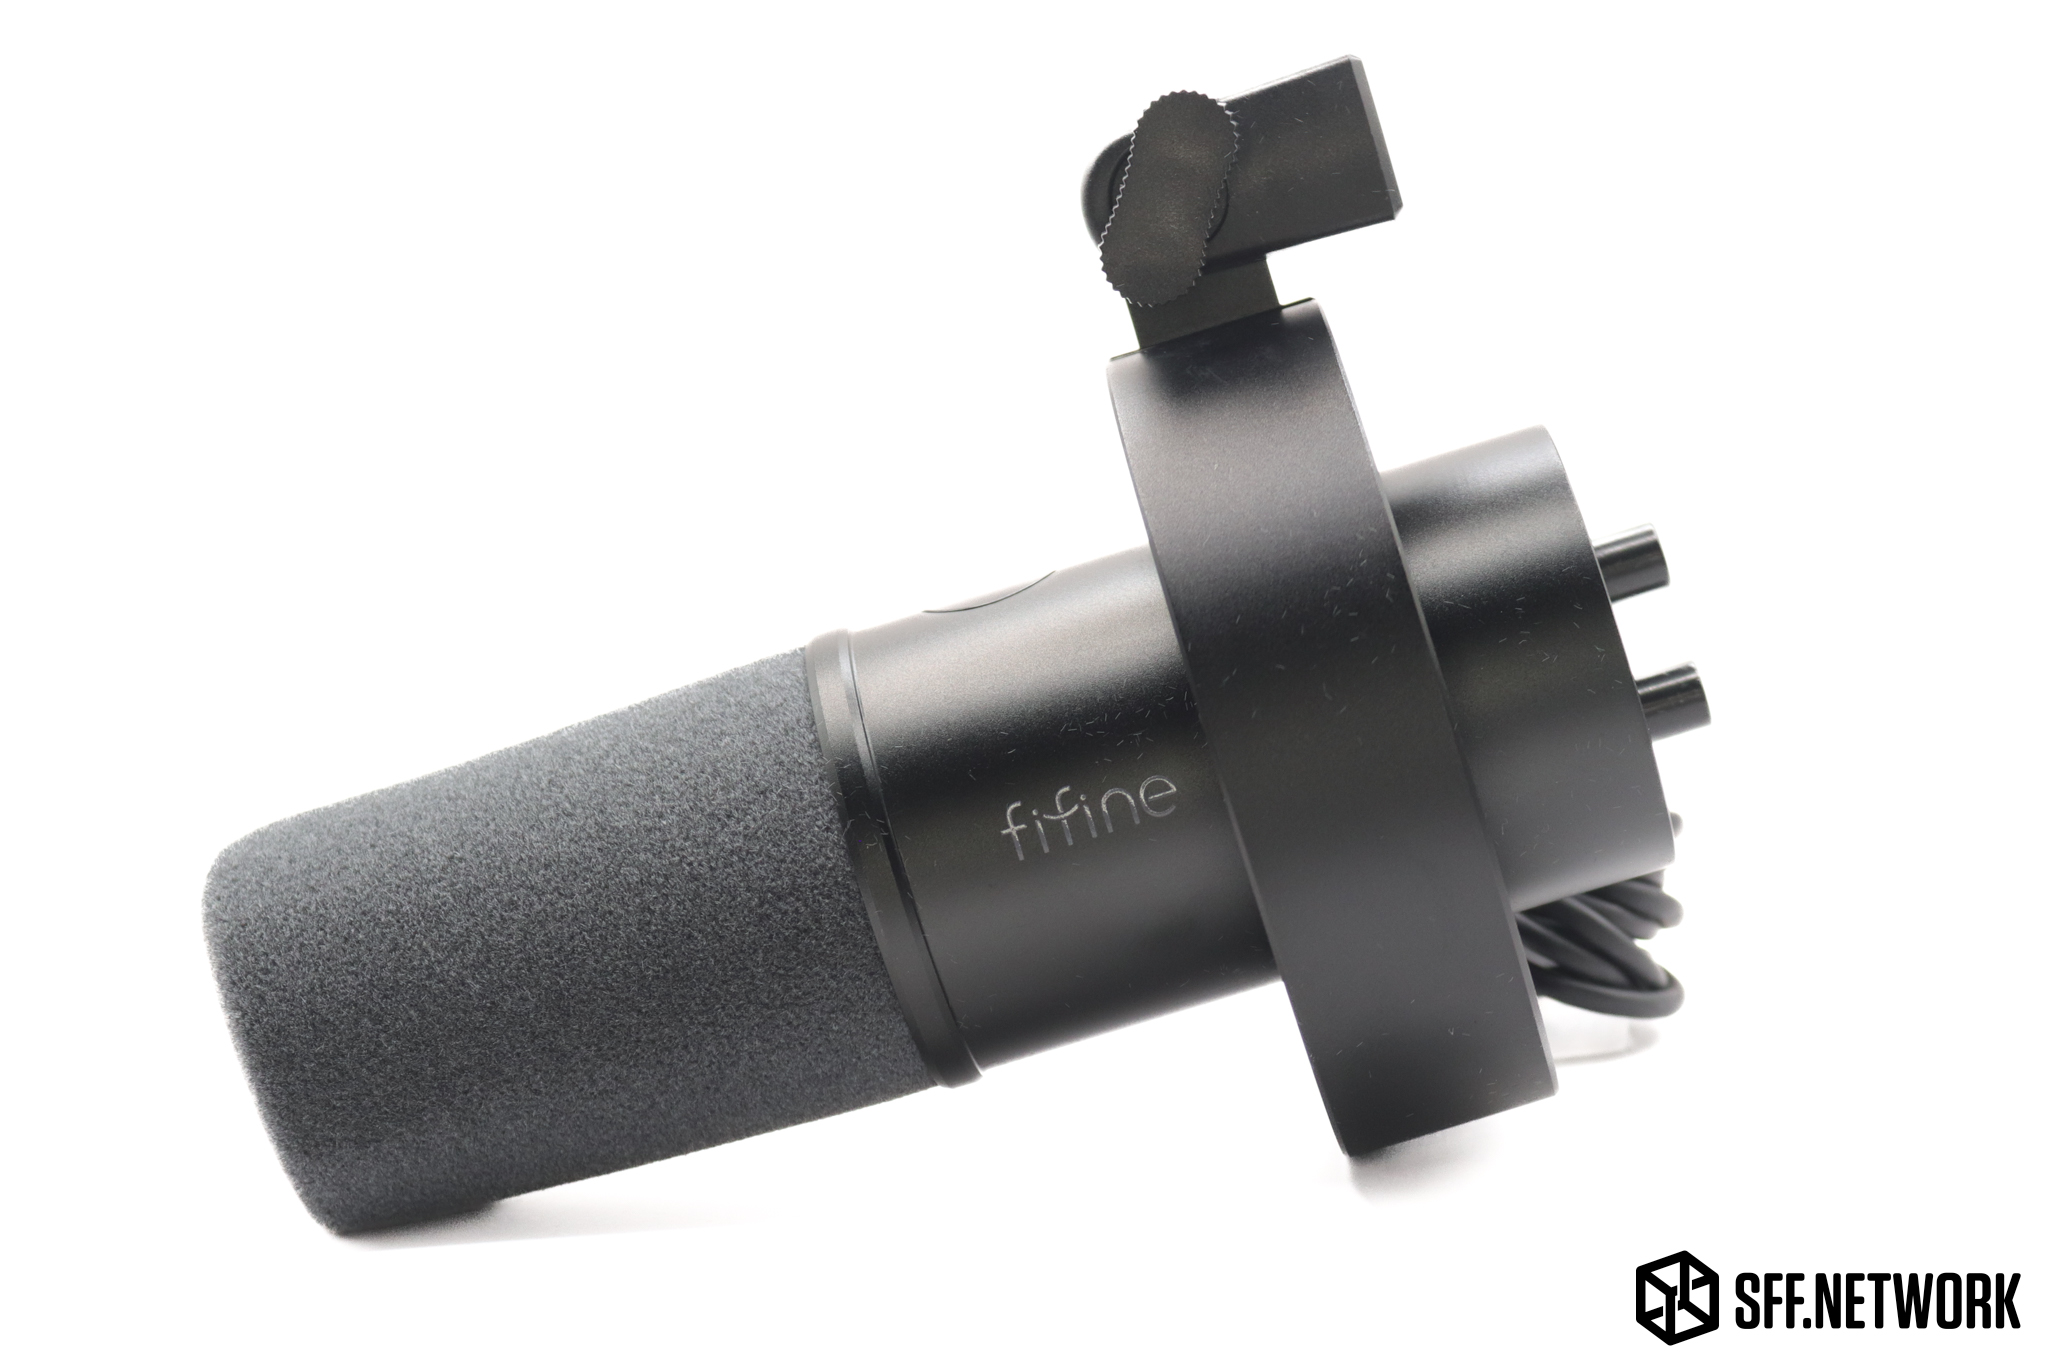 FIFINE's K688 USB/XLR Microphone – Streamer's Special or Bargain